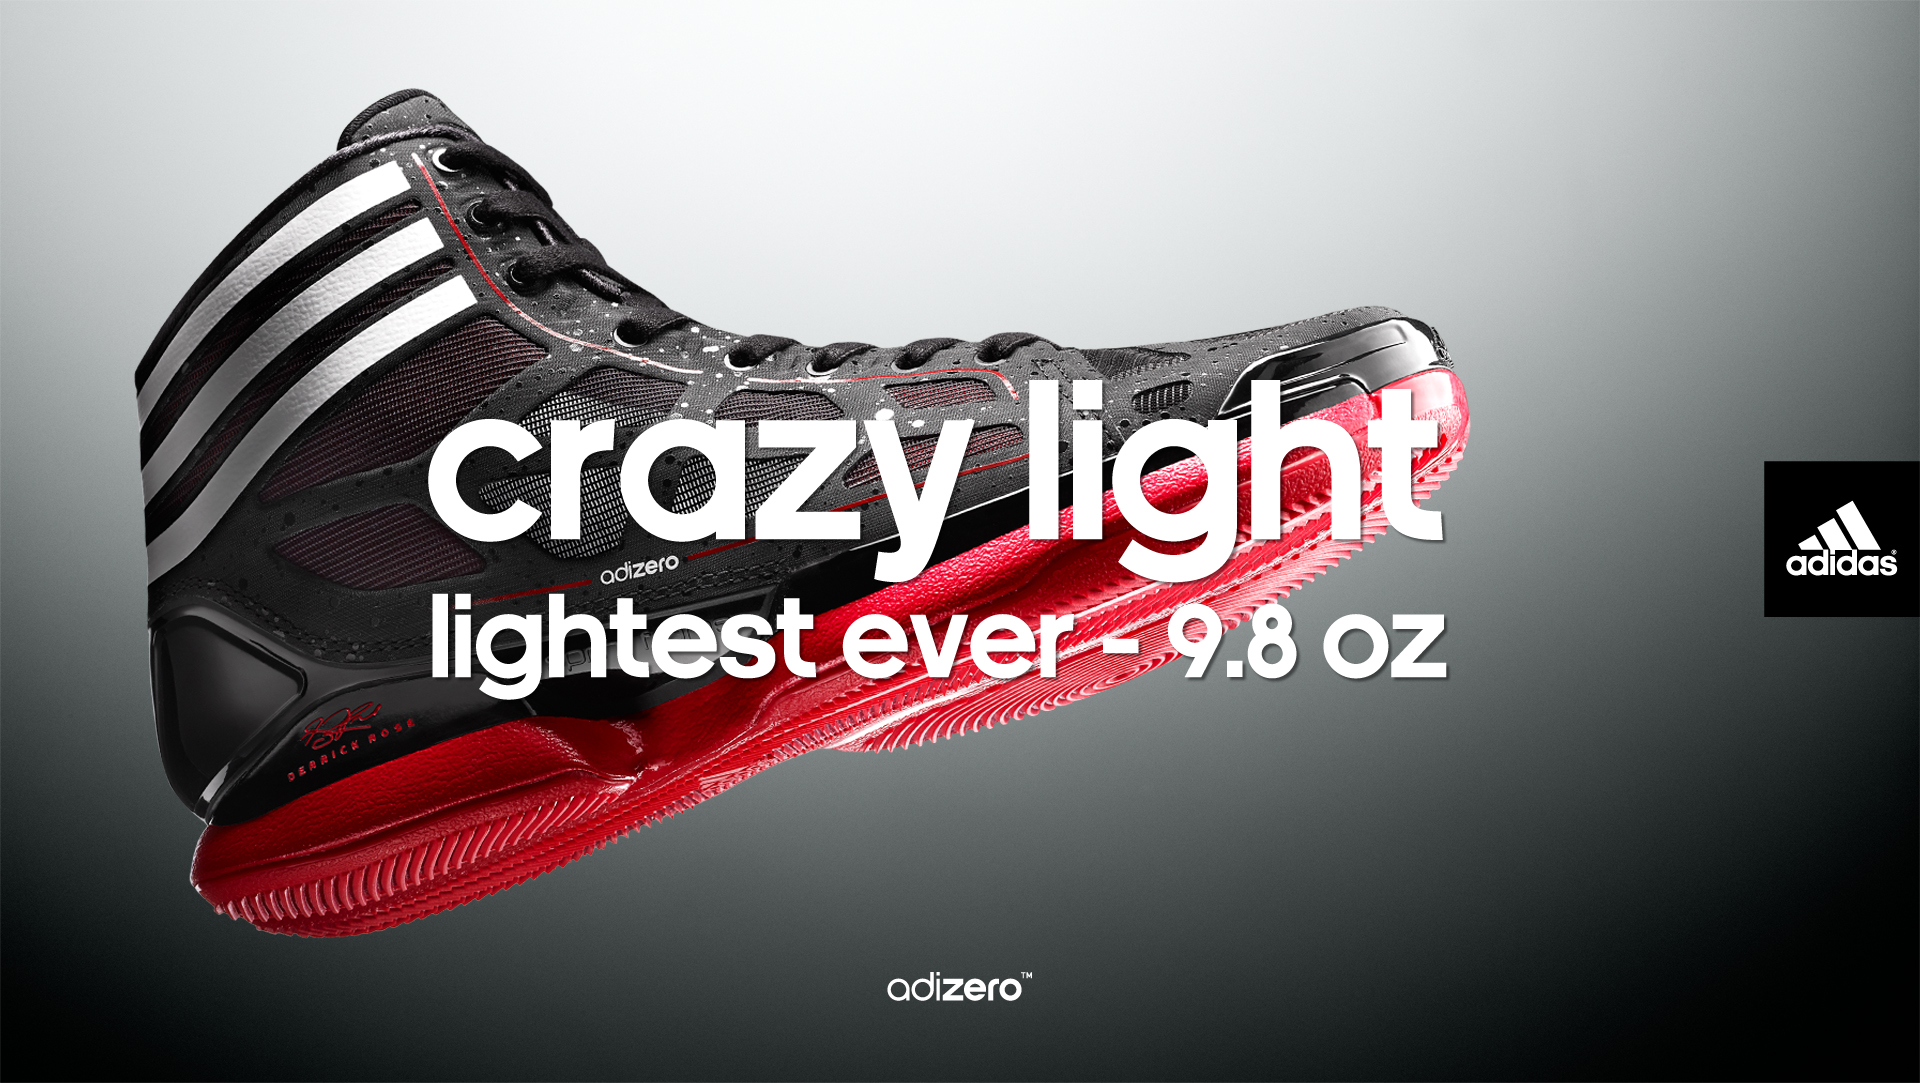 Adidas Adizero Crazy Light Derrick Rose Wallpaper Eastbay